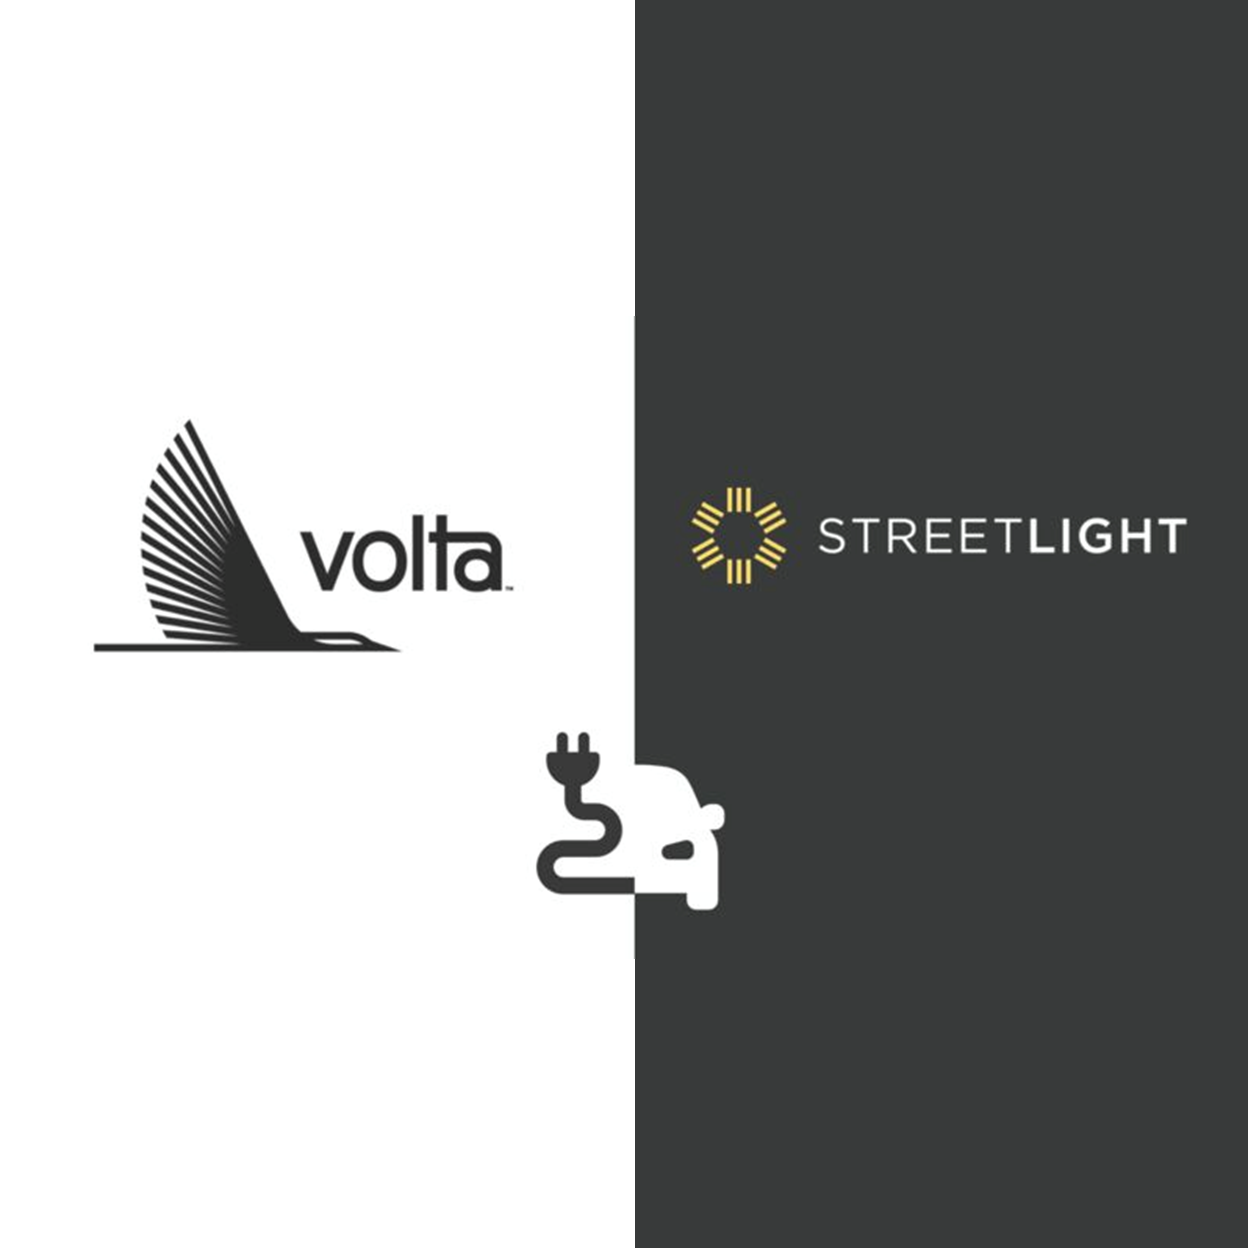 Volta + StreetLight